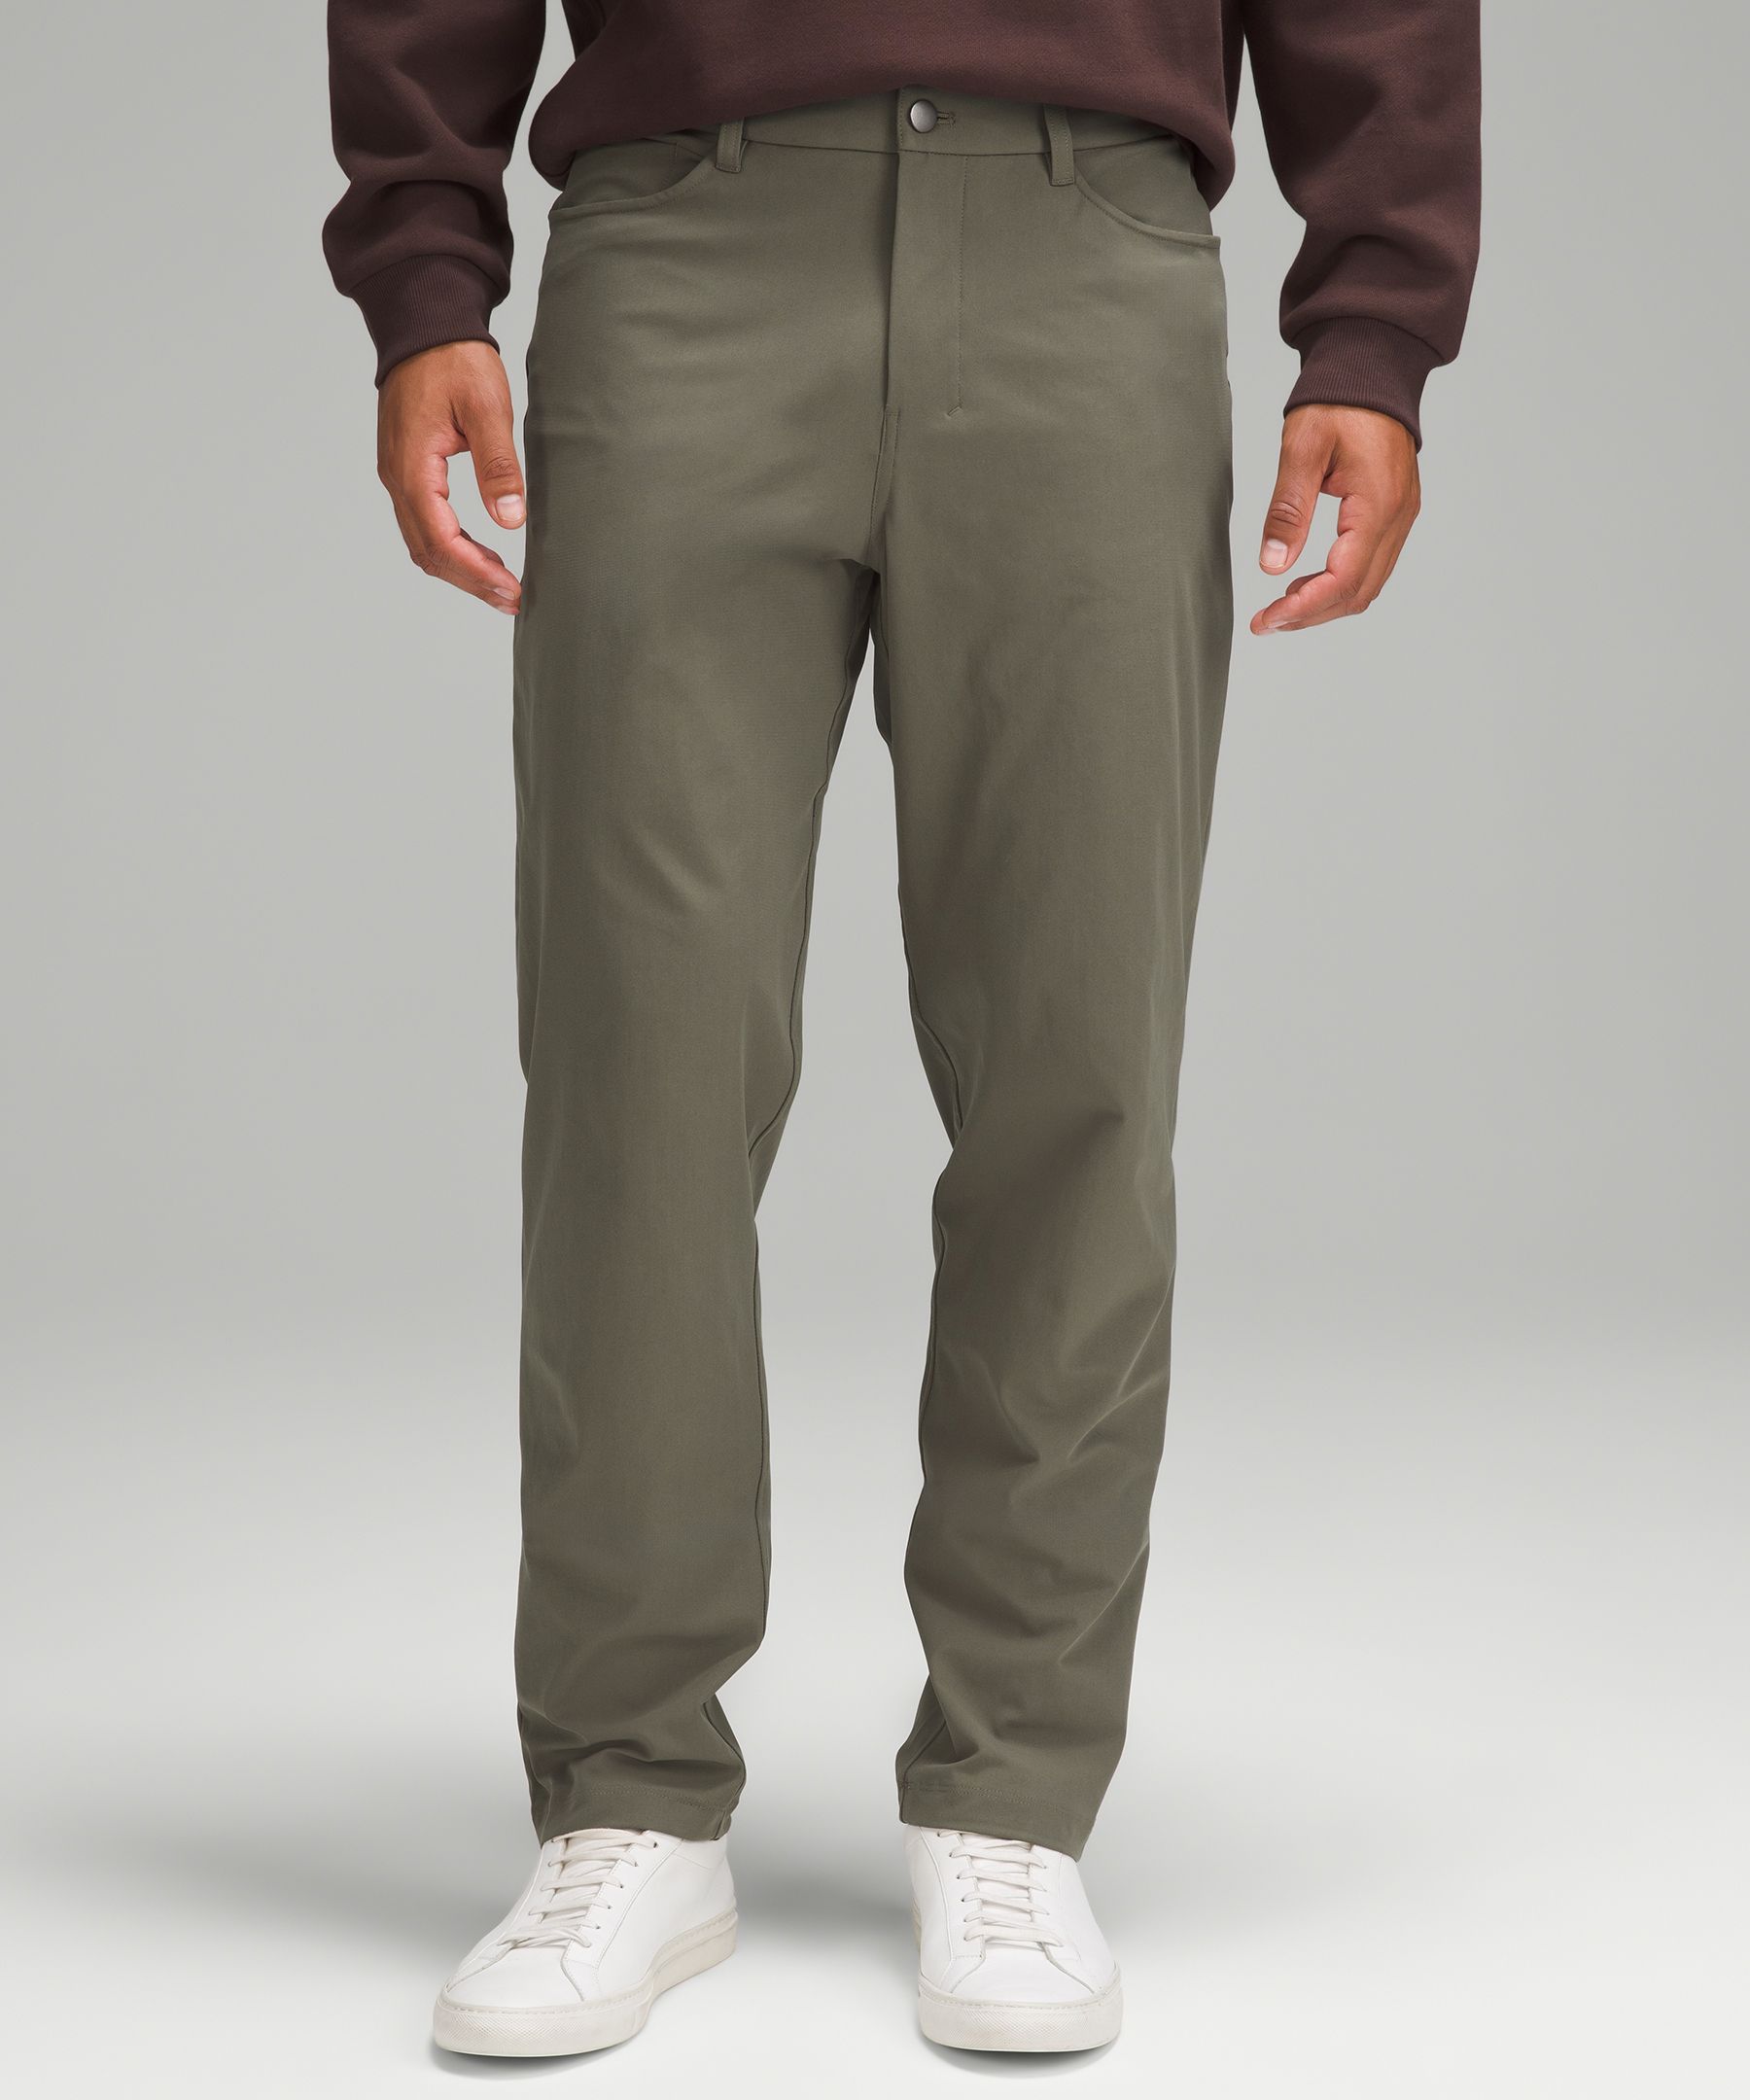 ABC Relaxed-Fit 5 Pocket Pant 34L *Warpstreme, Men's Trousers